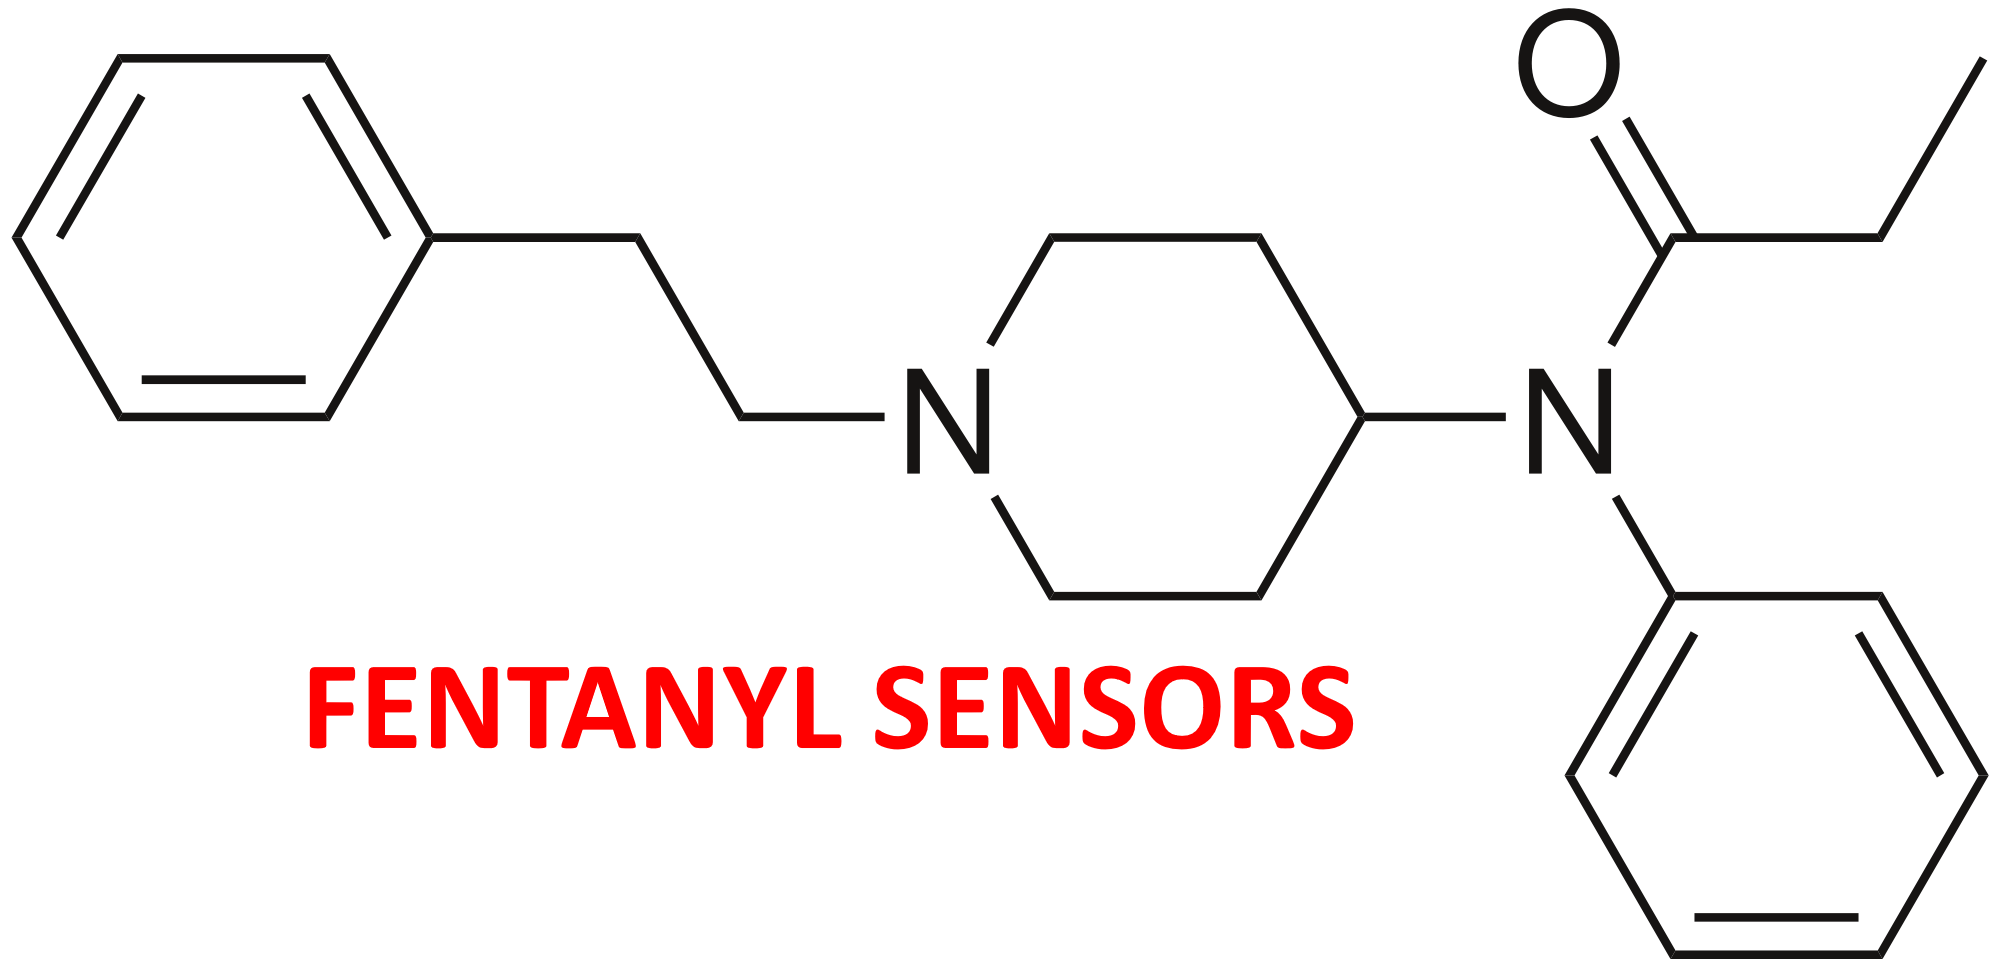 Fentanyl sensors for first responders